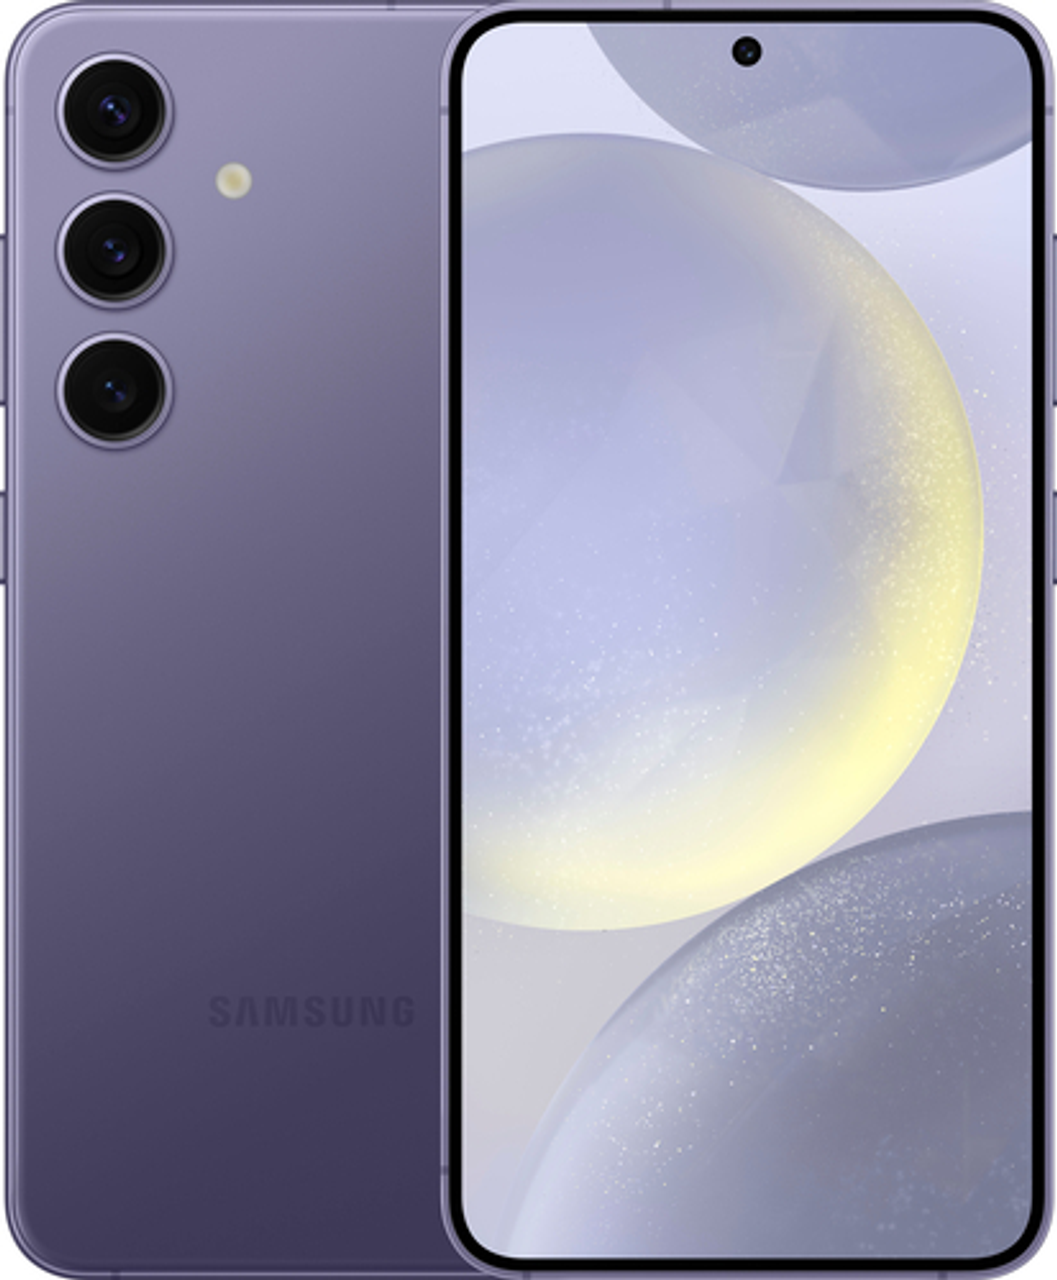 Samsung - Geek Squad Certified Refurbished Galaxy S24 128GB - Cobalt Violet (Verizon)